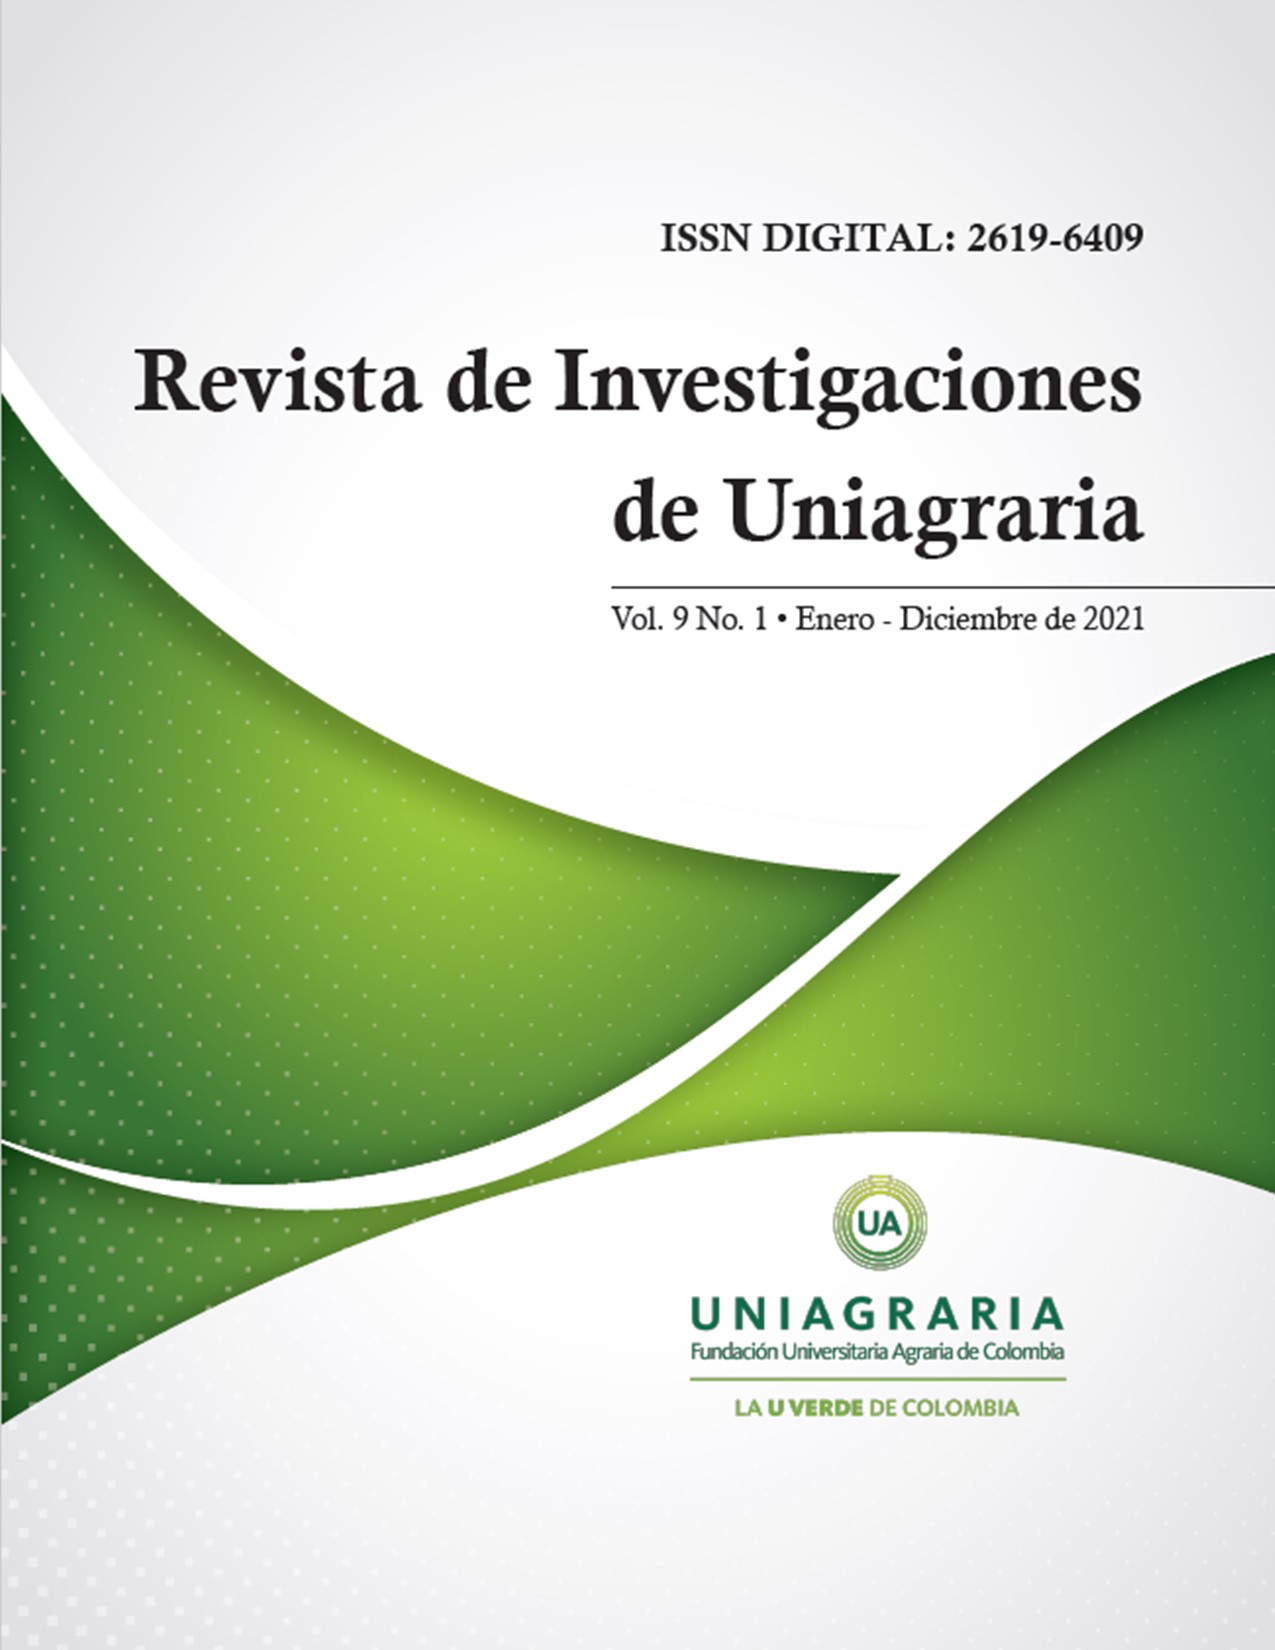 REVISTA DE INVESTIGACIONES DE UNIAGRARIA Vol. 9 Enero-diciembre 2021